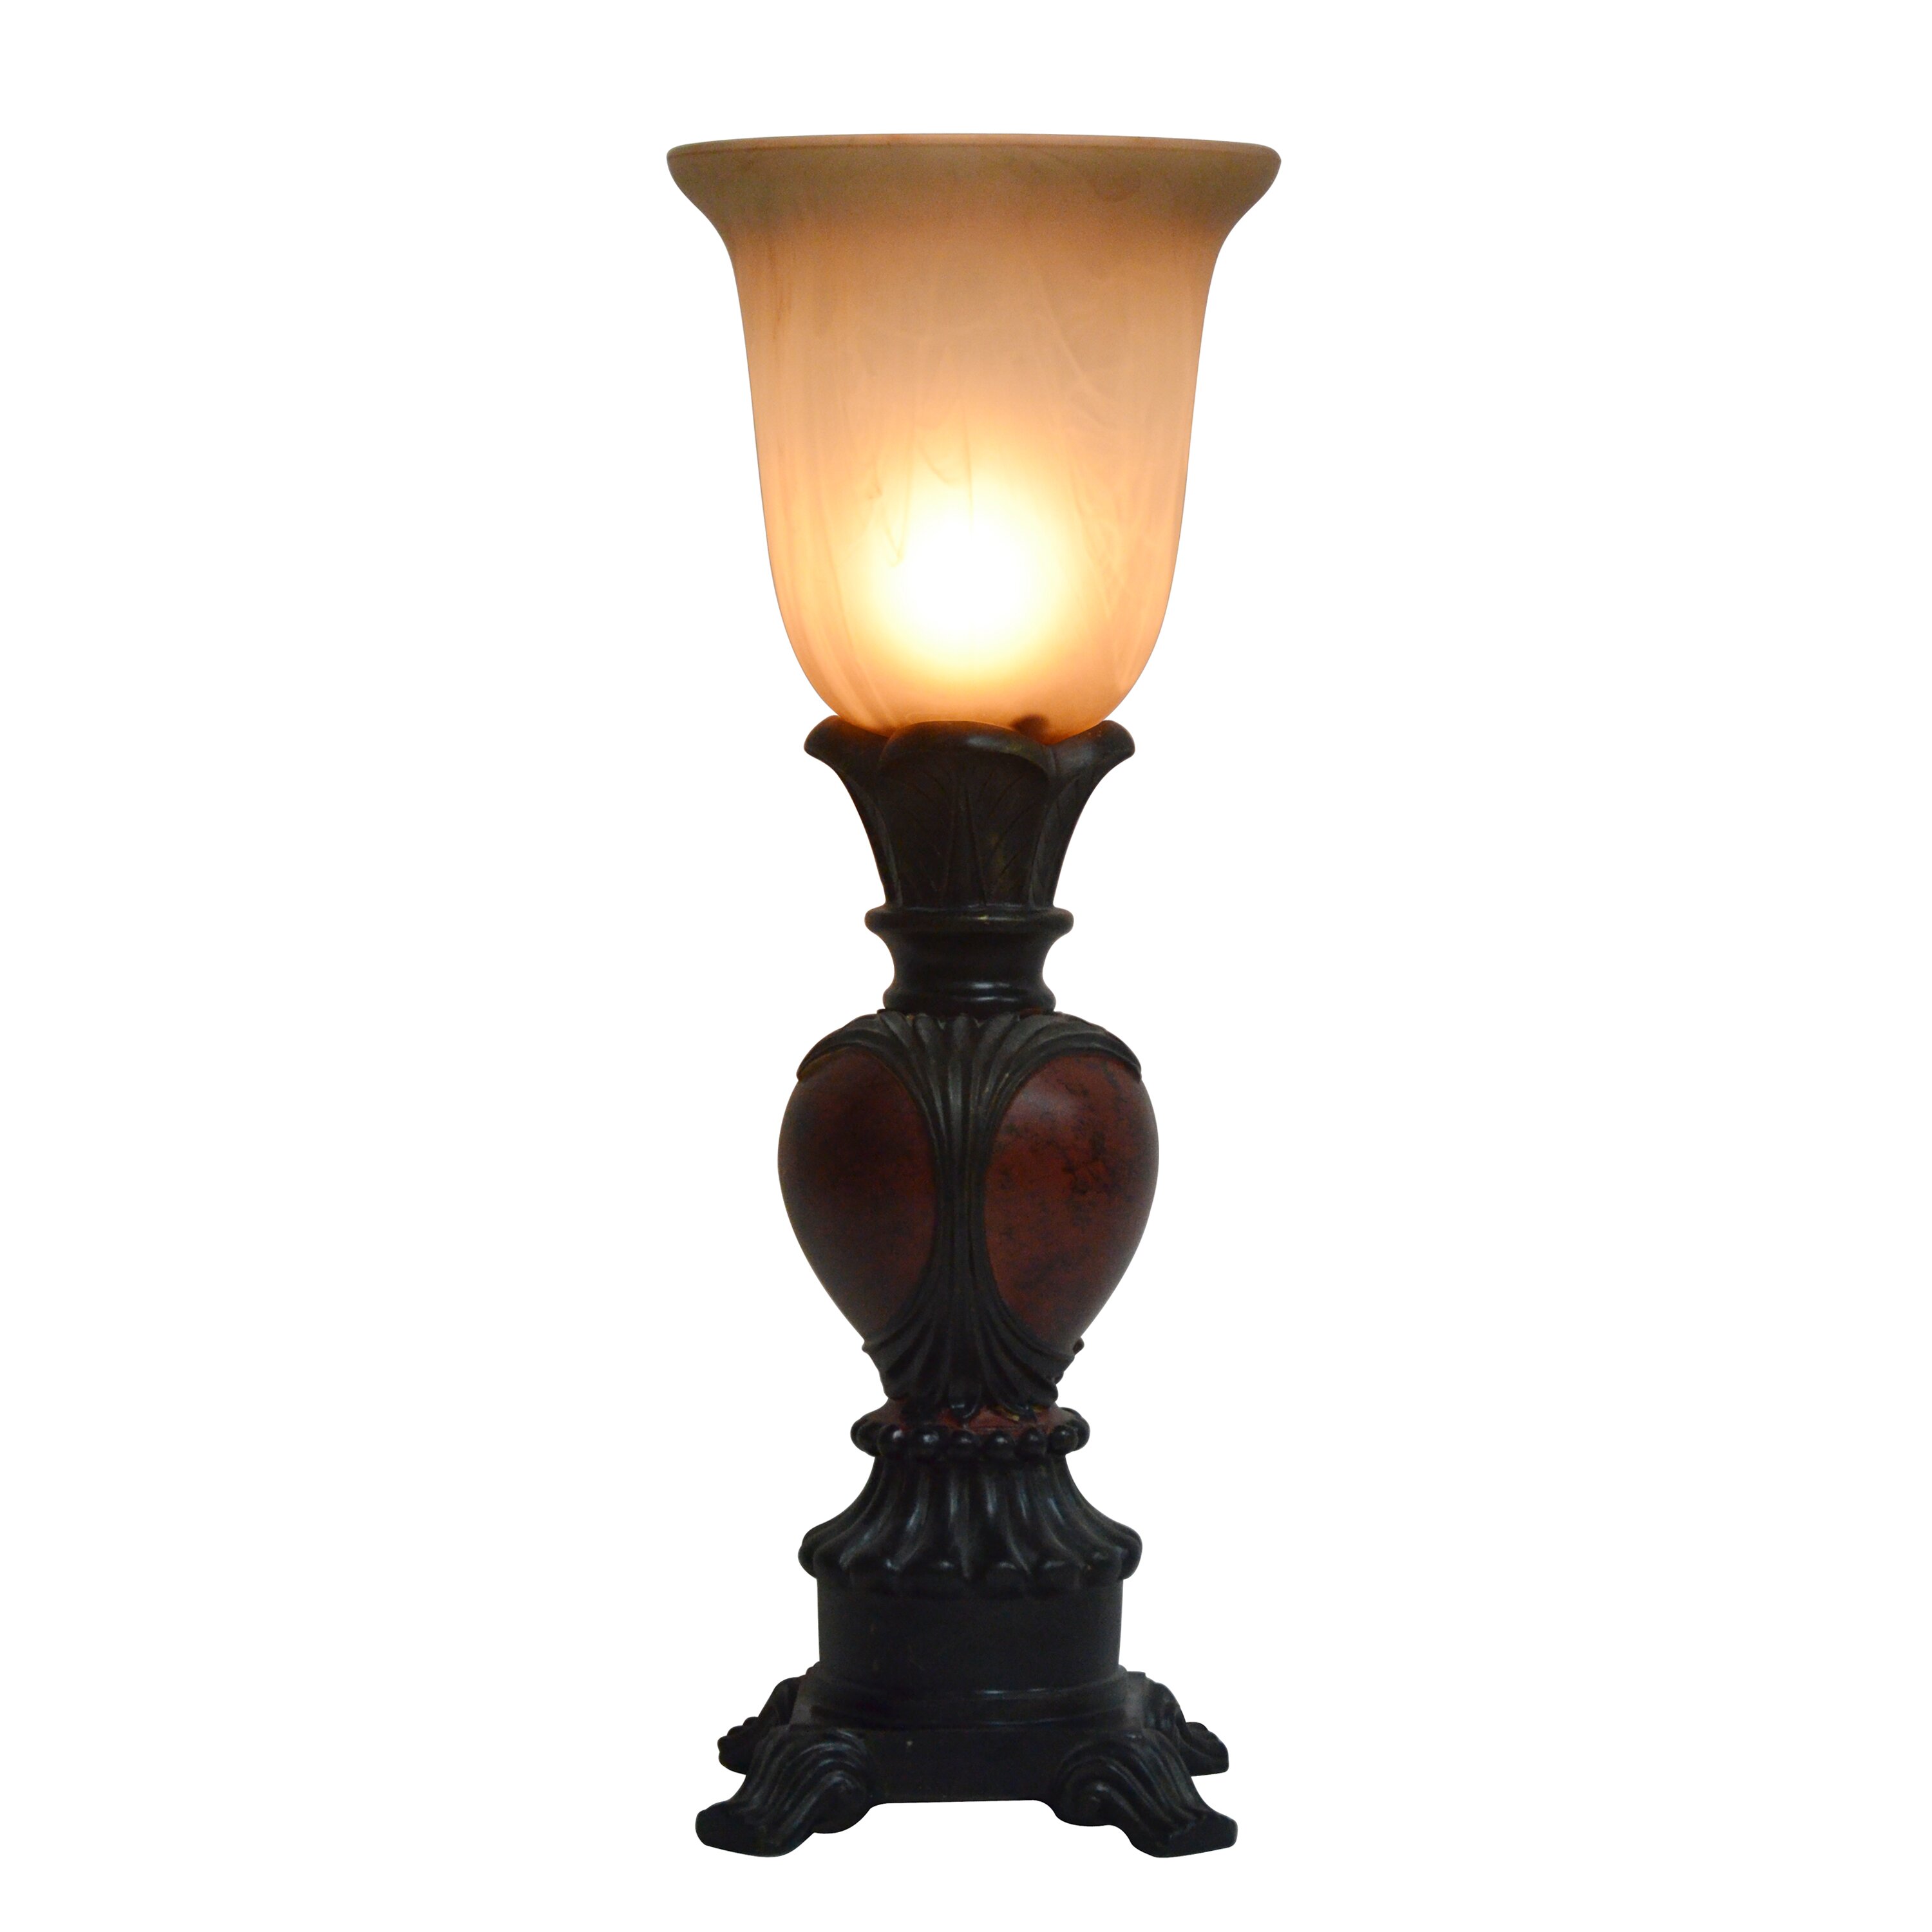 Decor Therapy Uplight 16" Table Lamp & Reviews | Wayfair